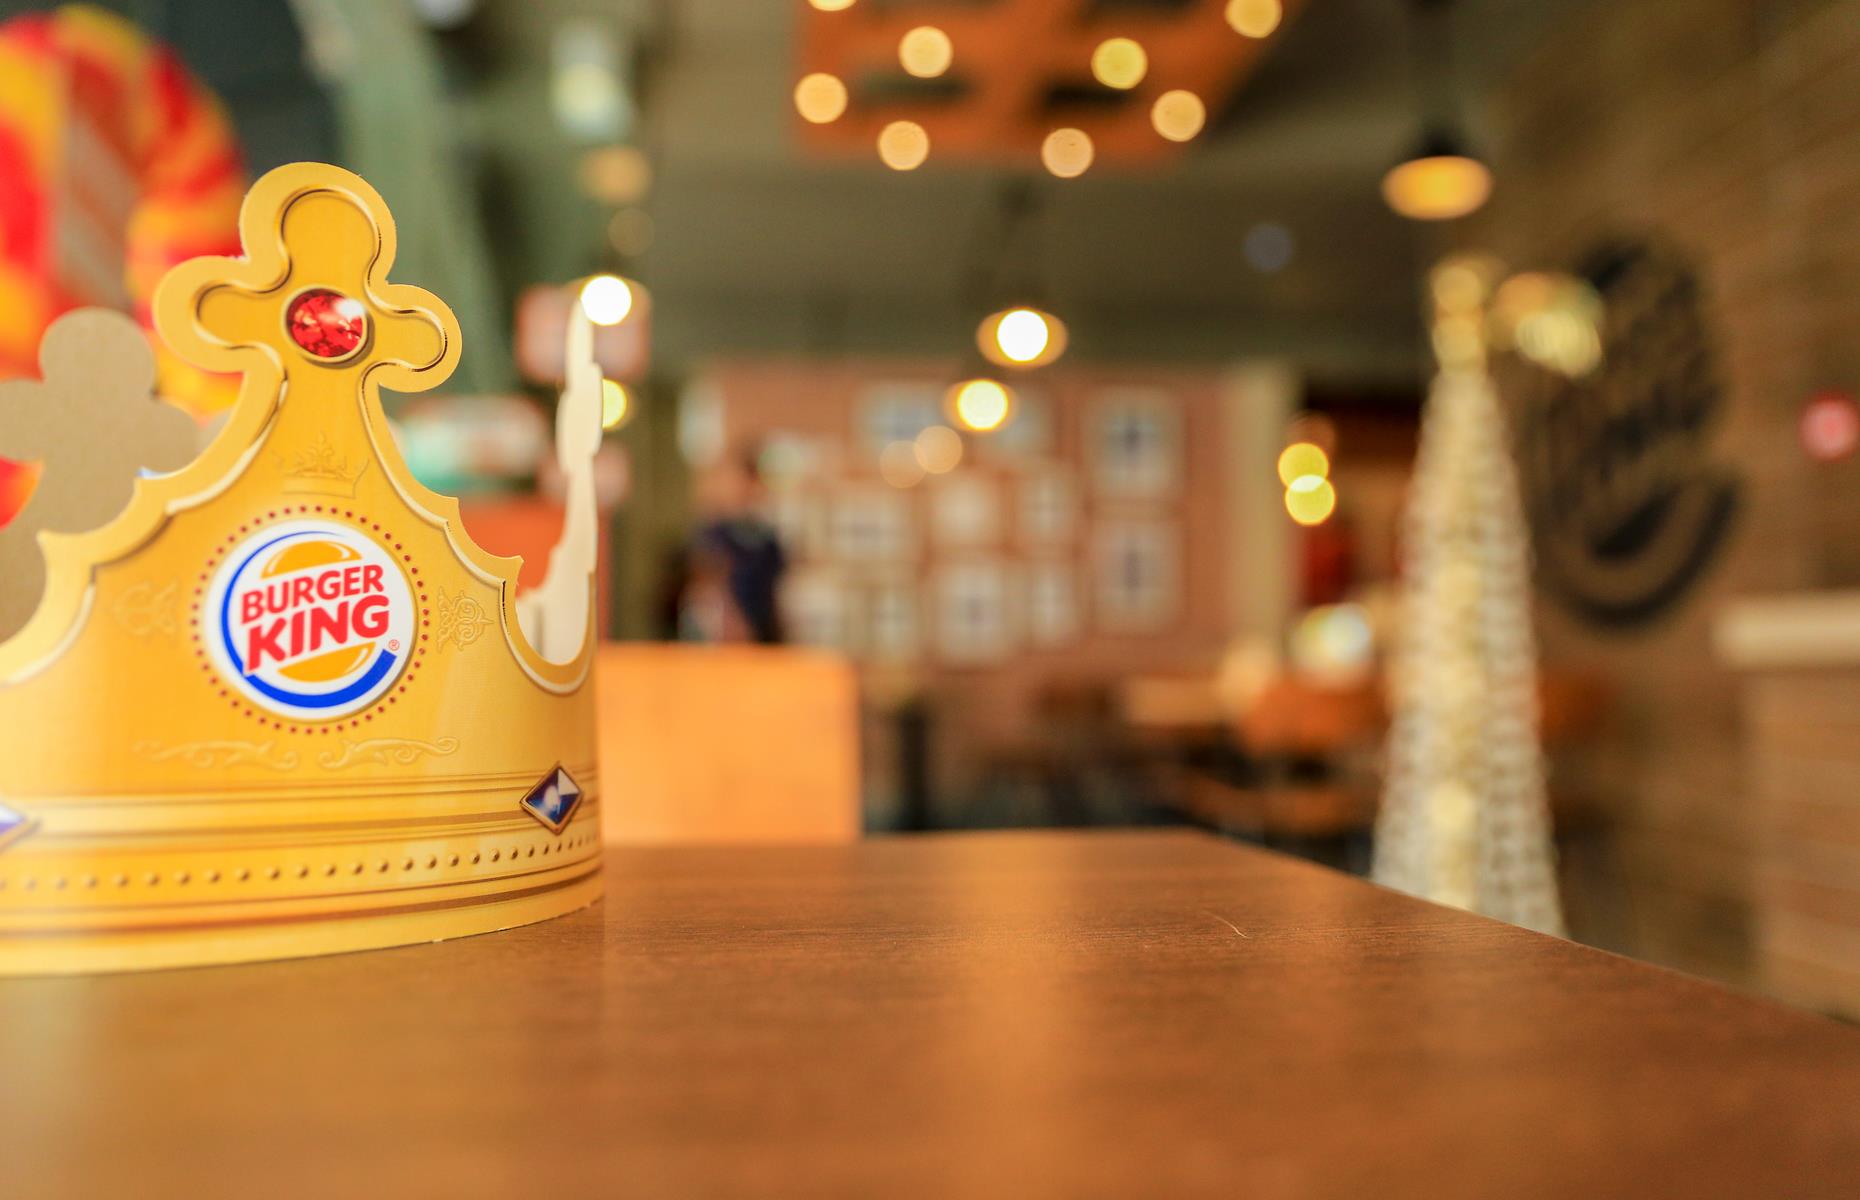 Burger King vs McDonald's